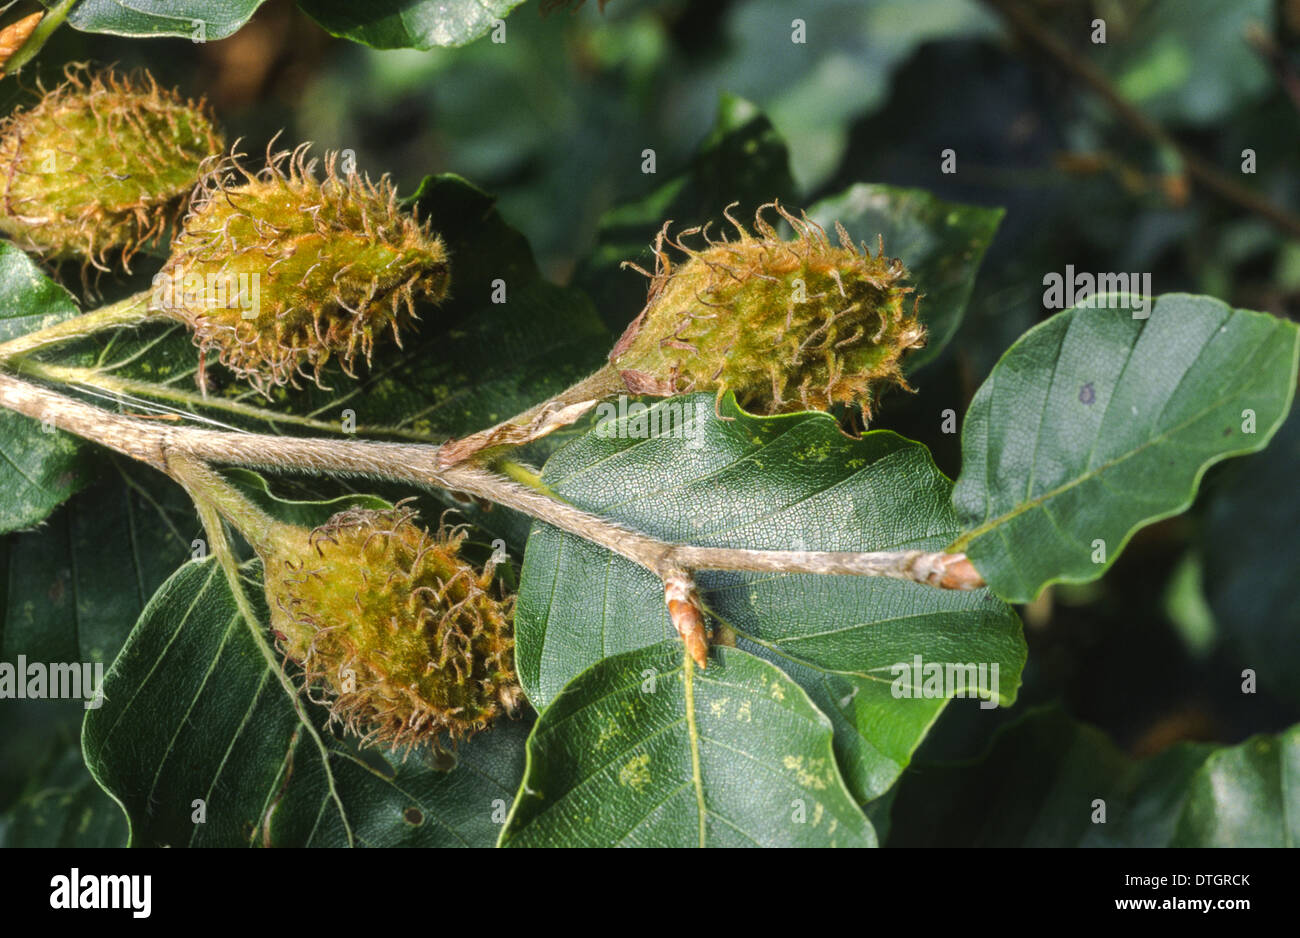 BEECH NUTS OR BEECHMAST ON BEECH TREE (Fagus sylvatica) Stock Photo